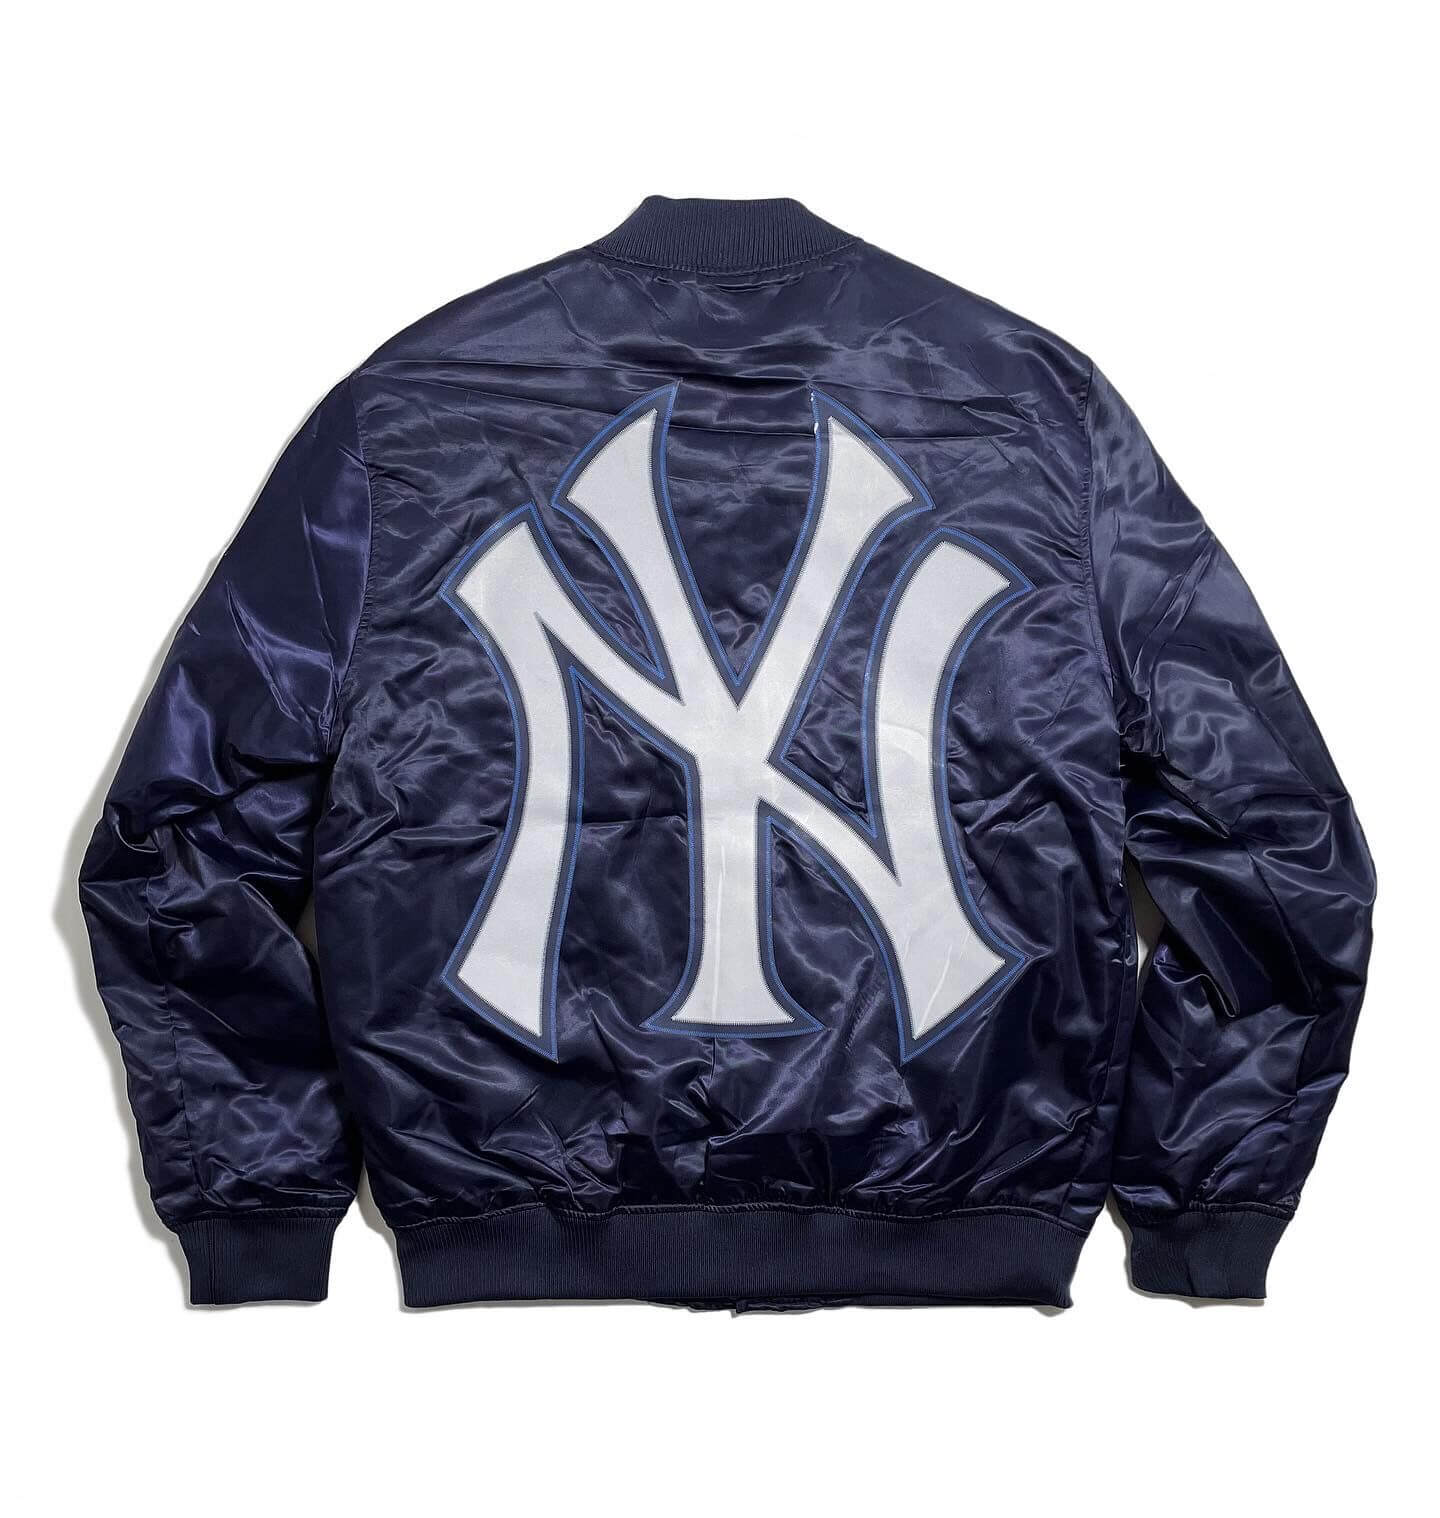 New York Yankees World Series MLB Navy Satin Jacket - Maker of Jacket